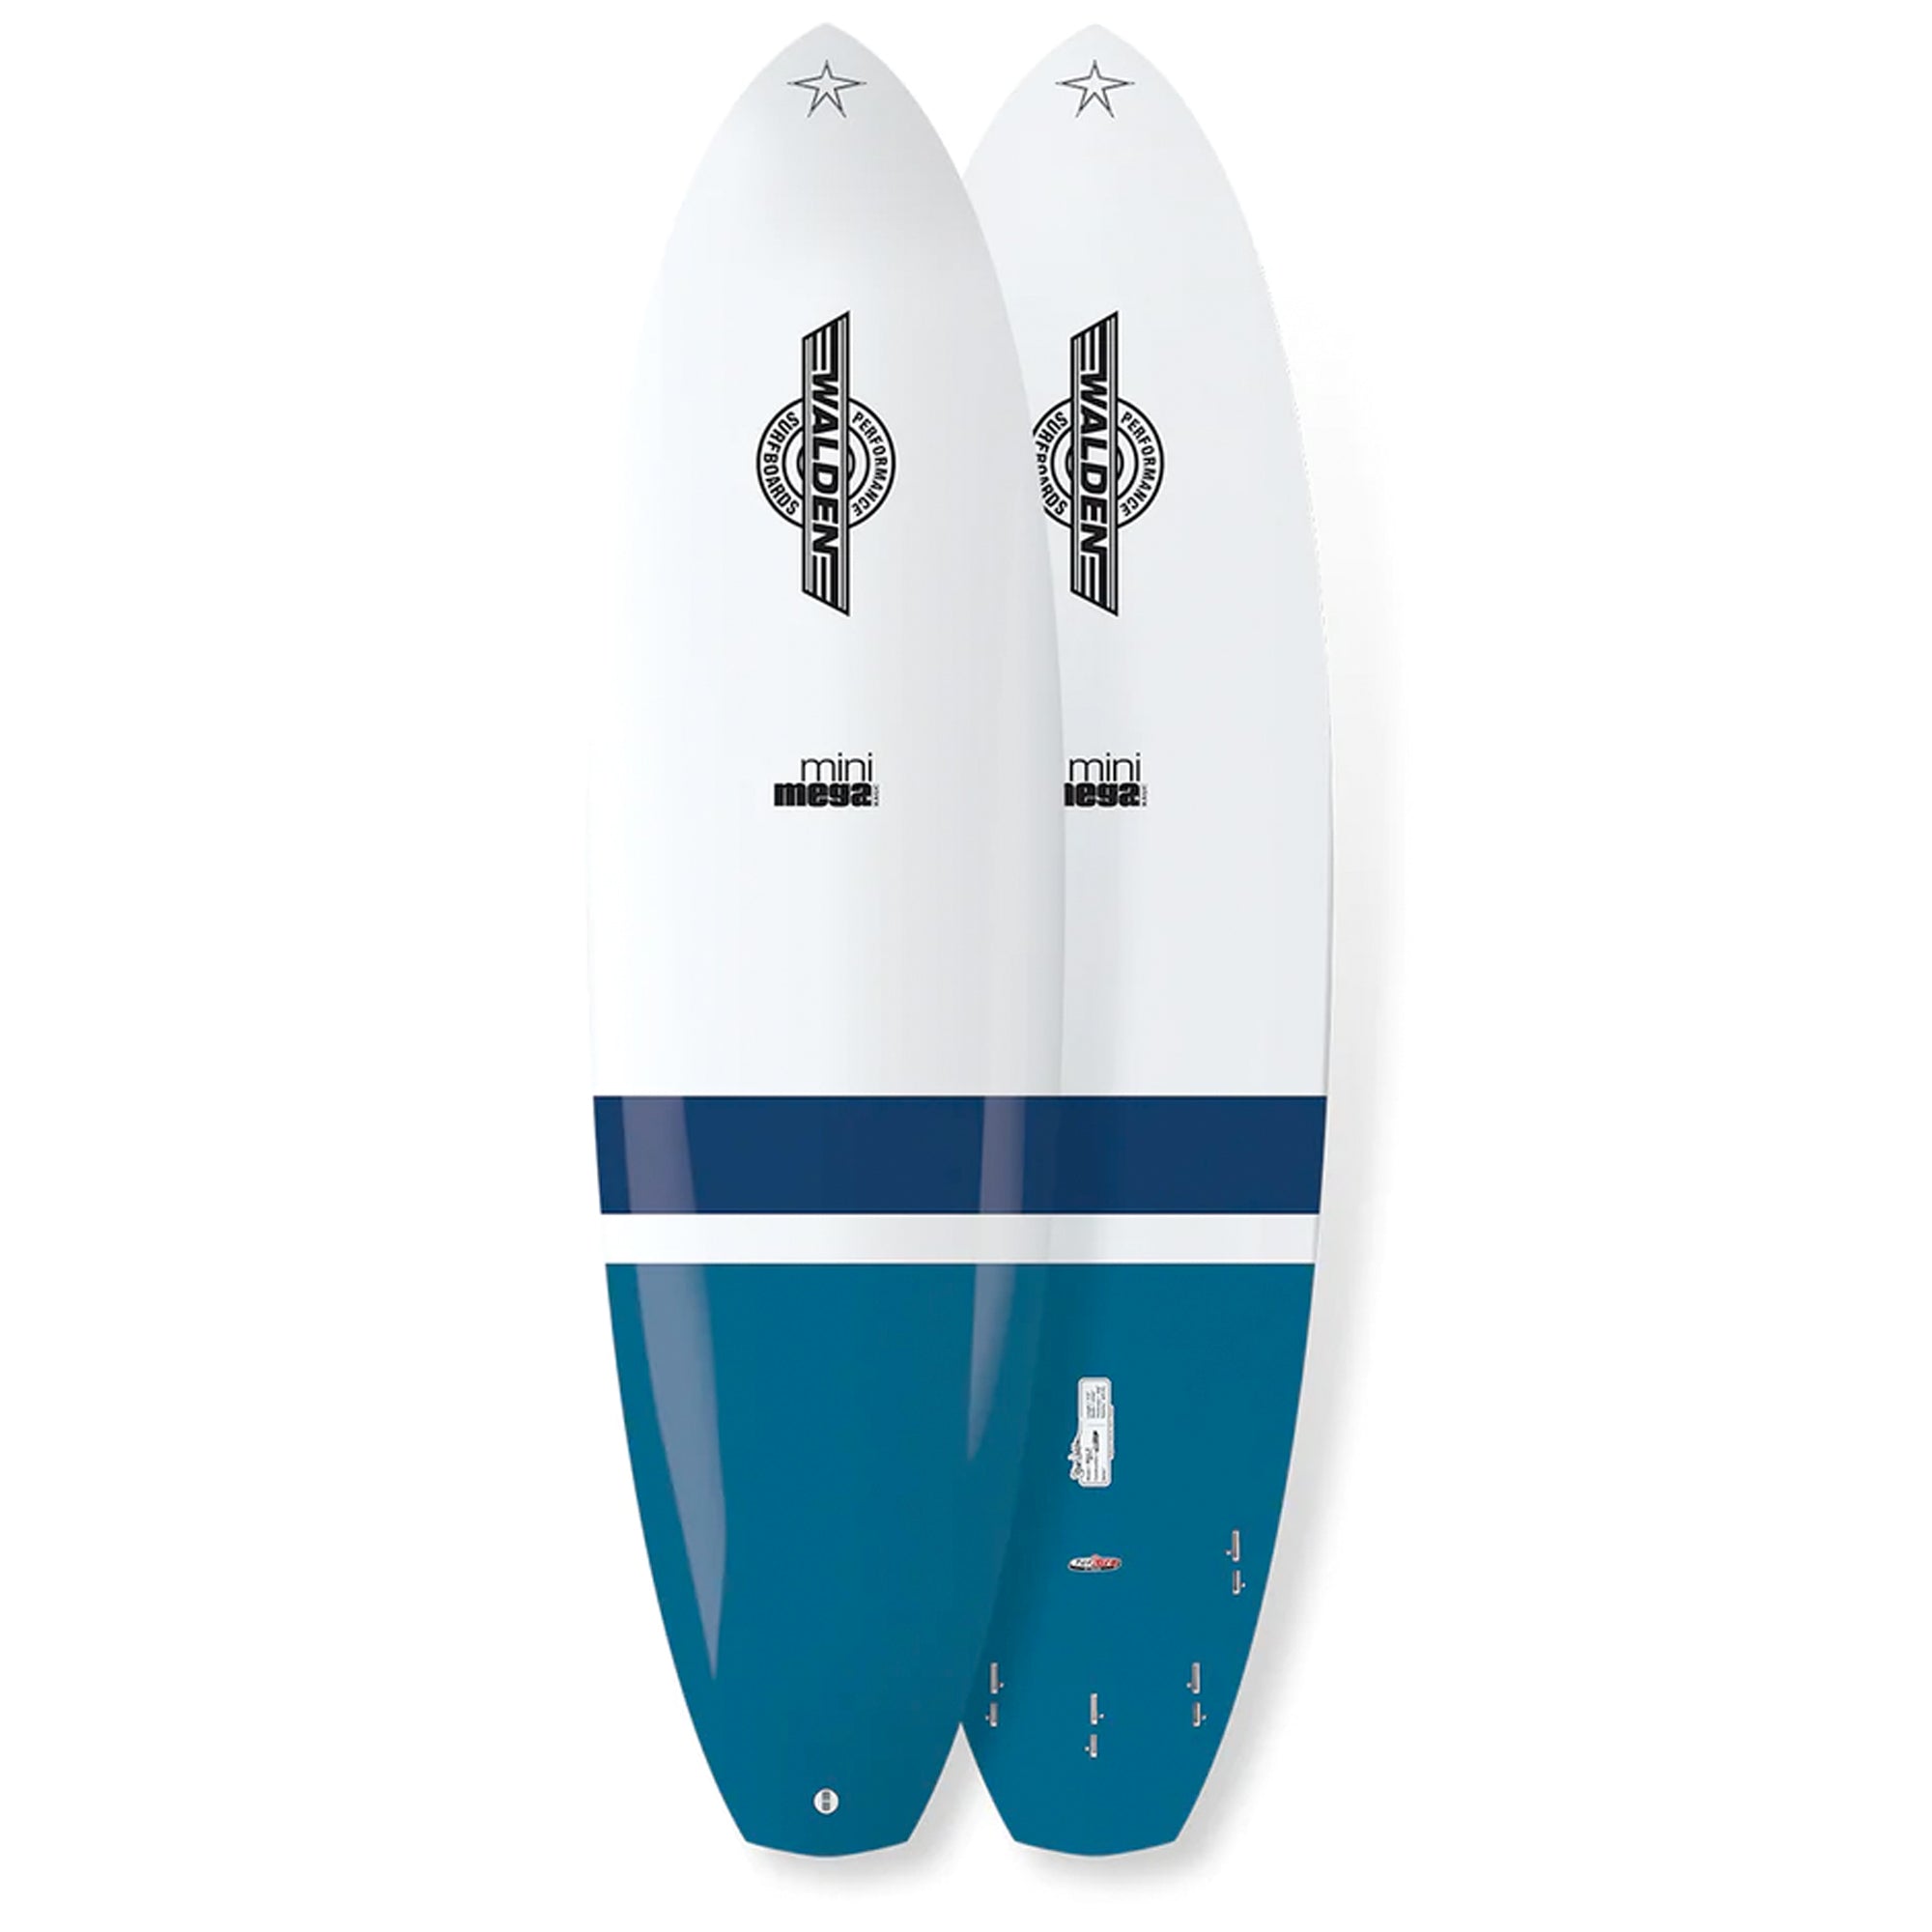 Walden Mini Mega Magic 2 Surfboard - Tuflite PC